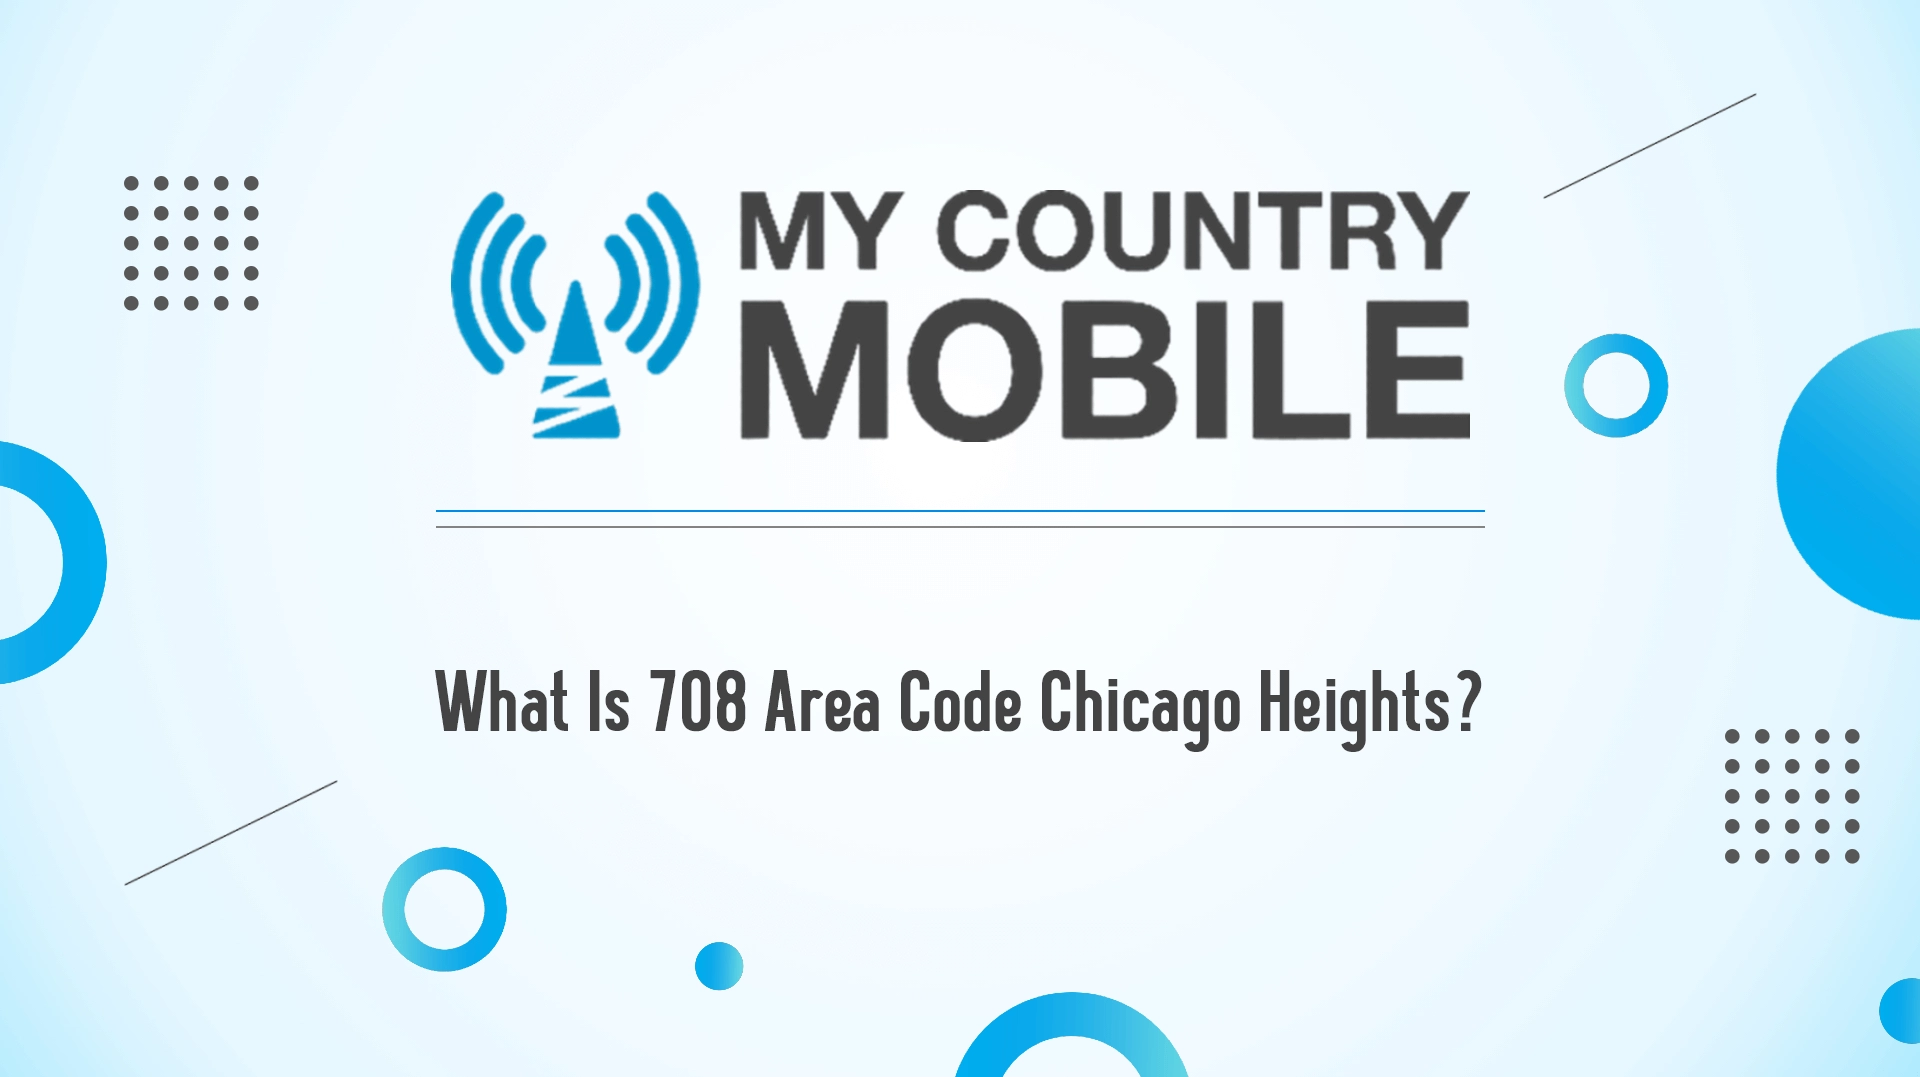 708 Area Code Chicago Heights